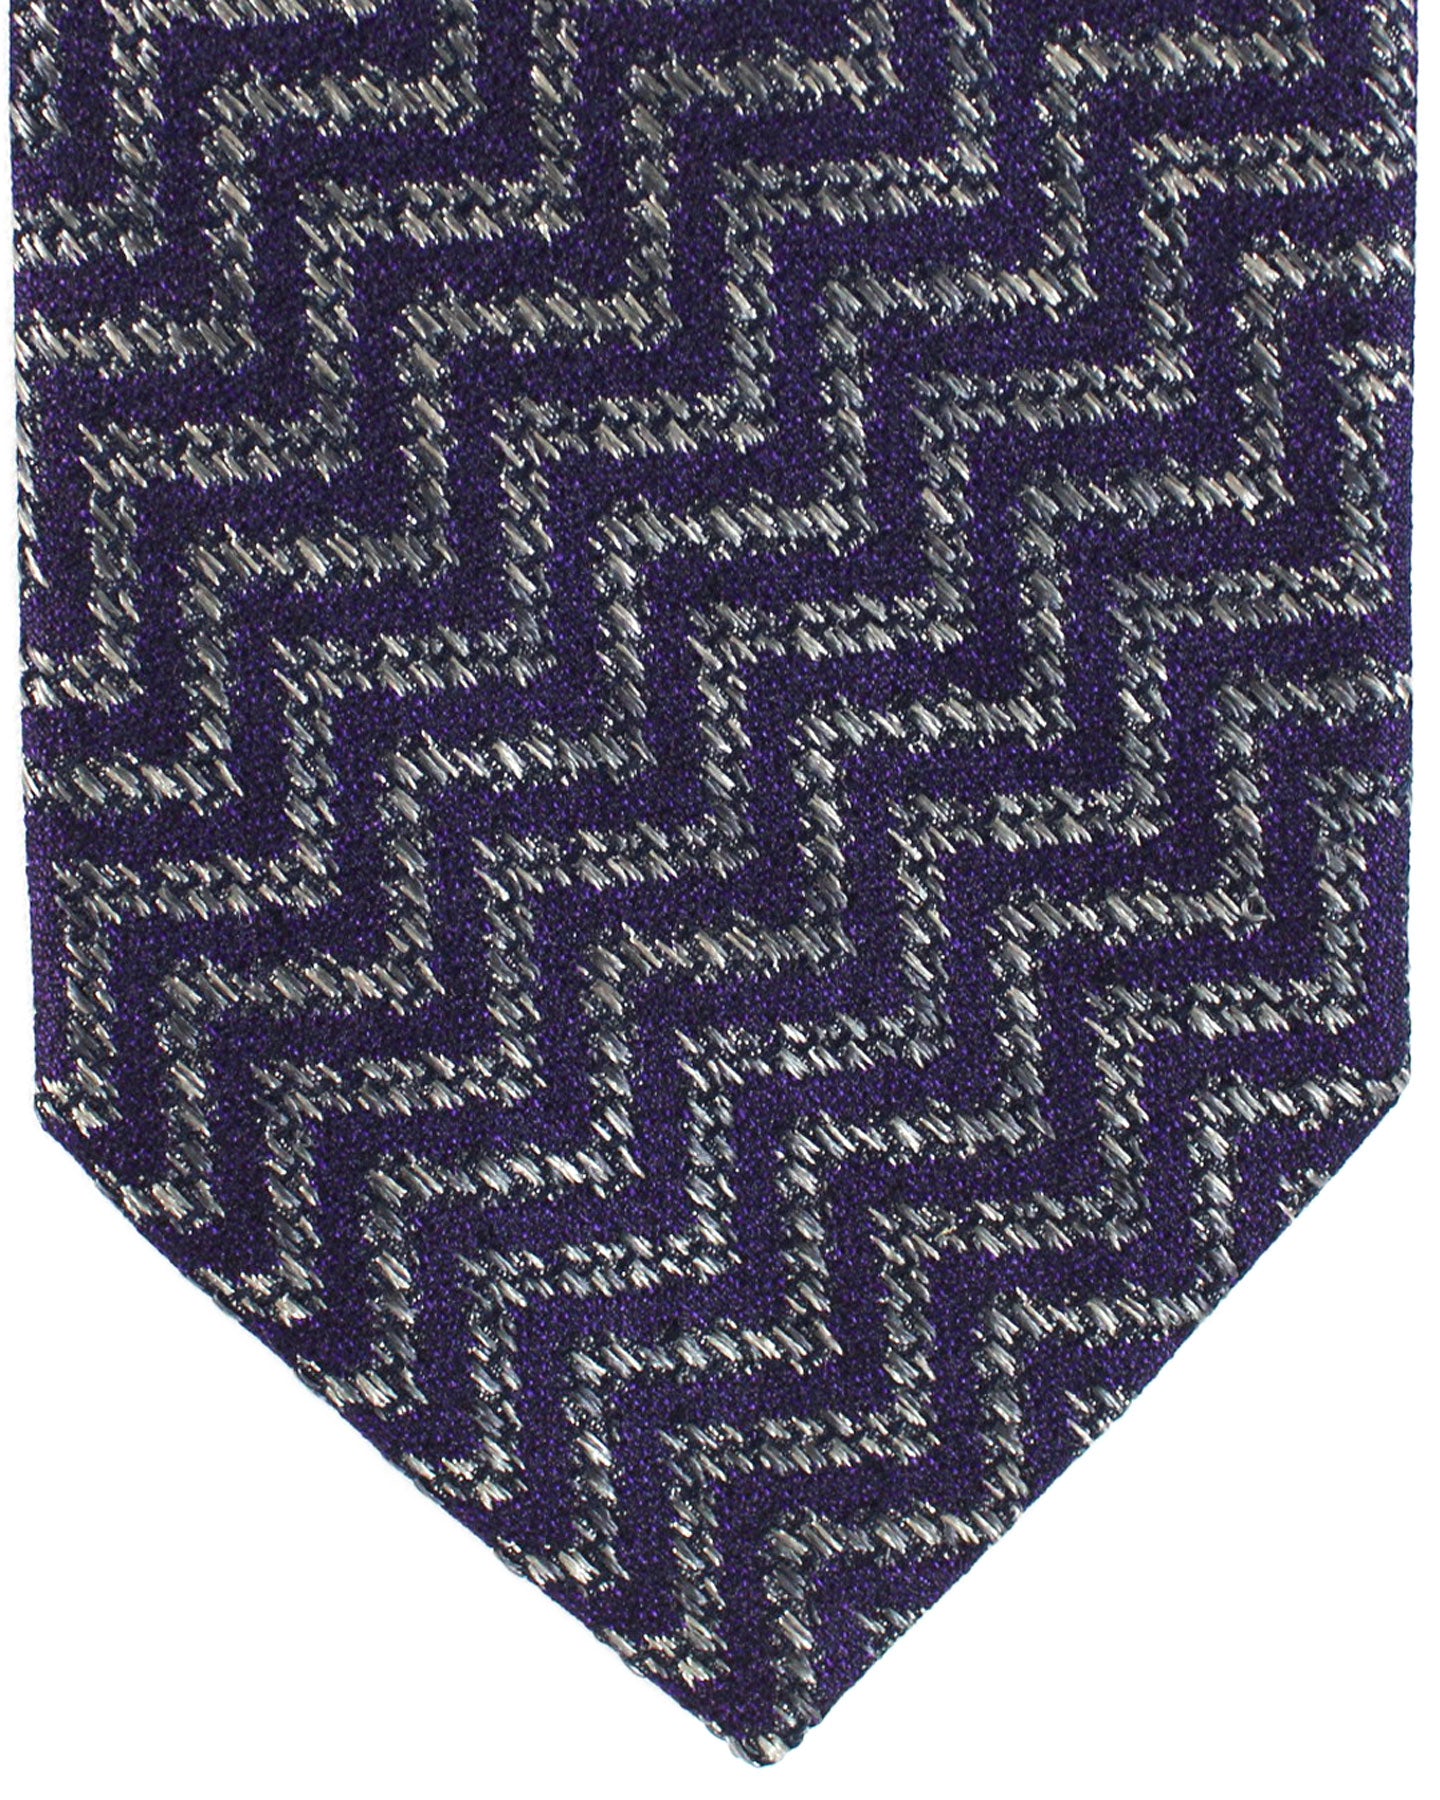 Missoni Necktie Purple Gray Zig Zag Design